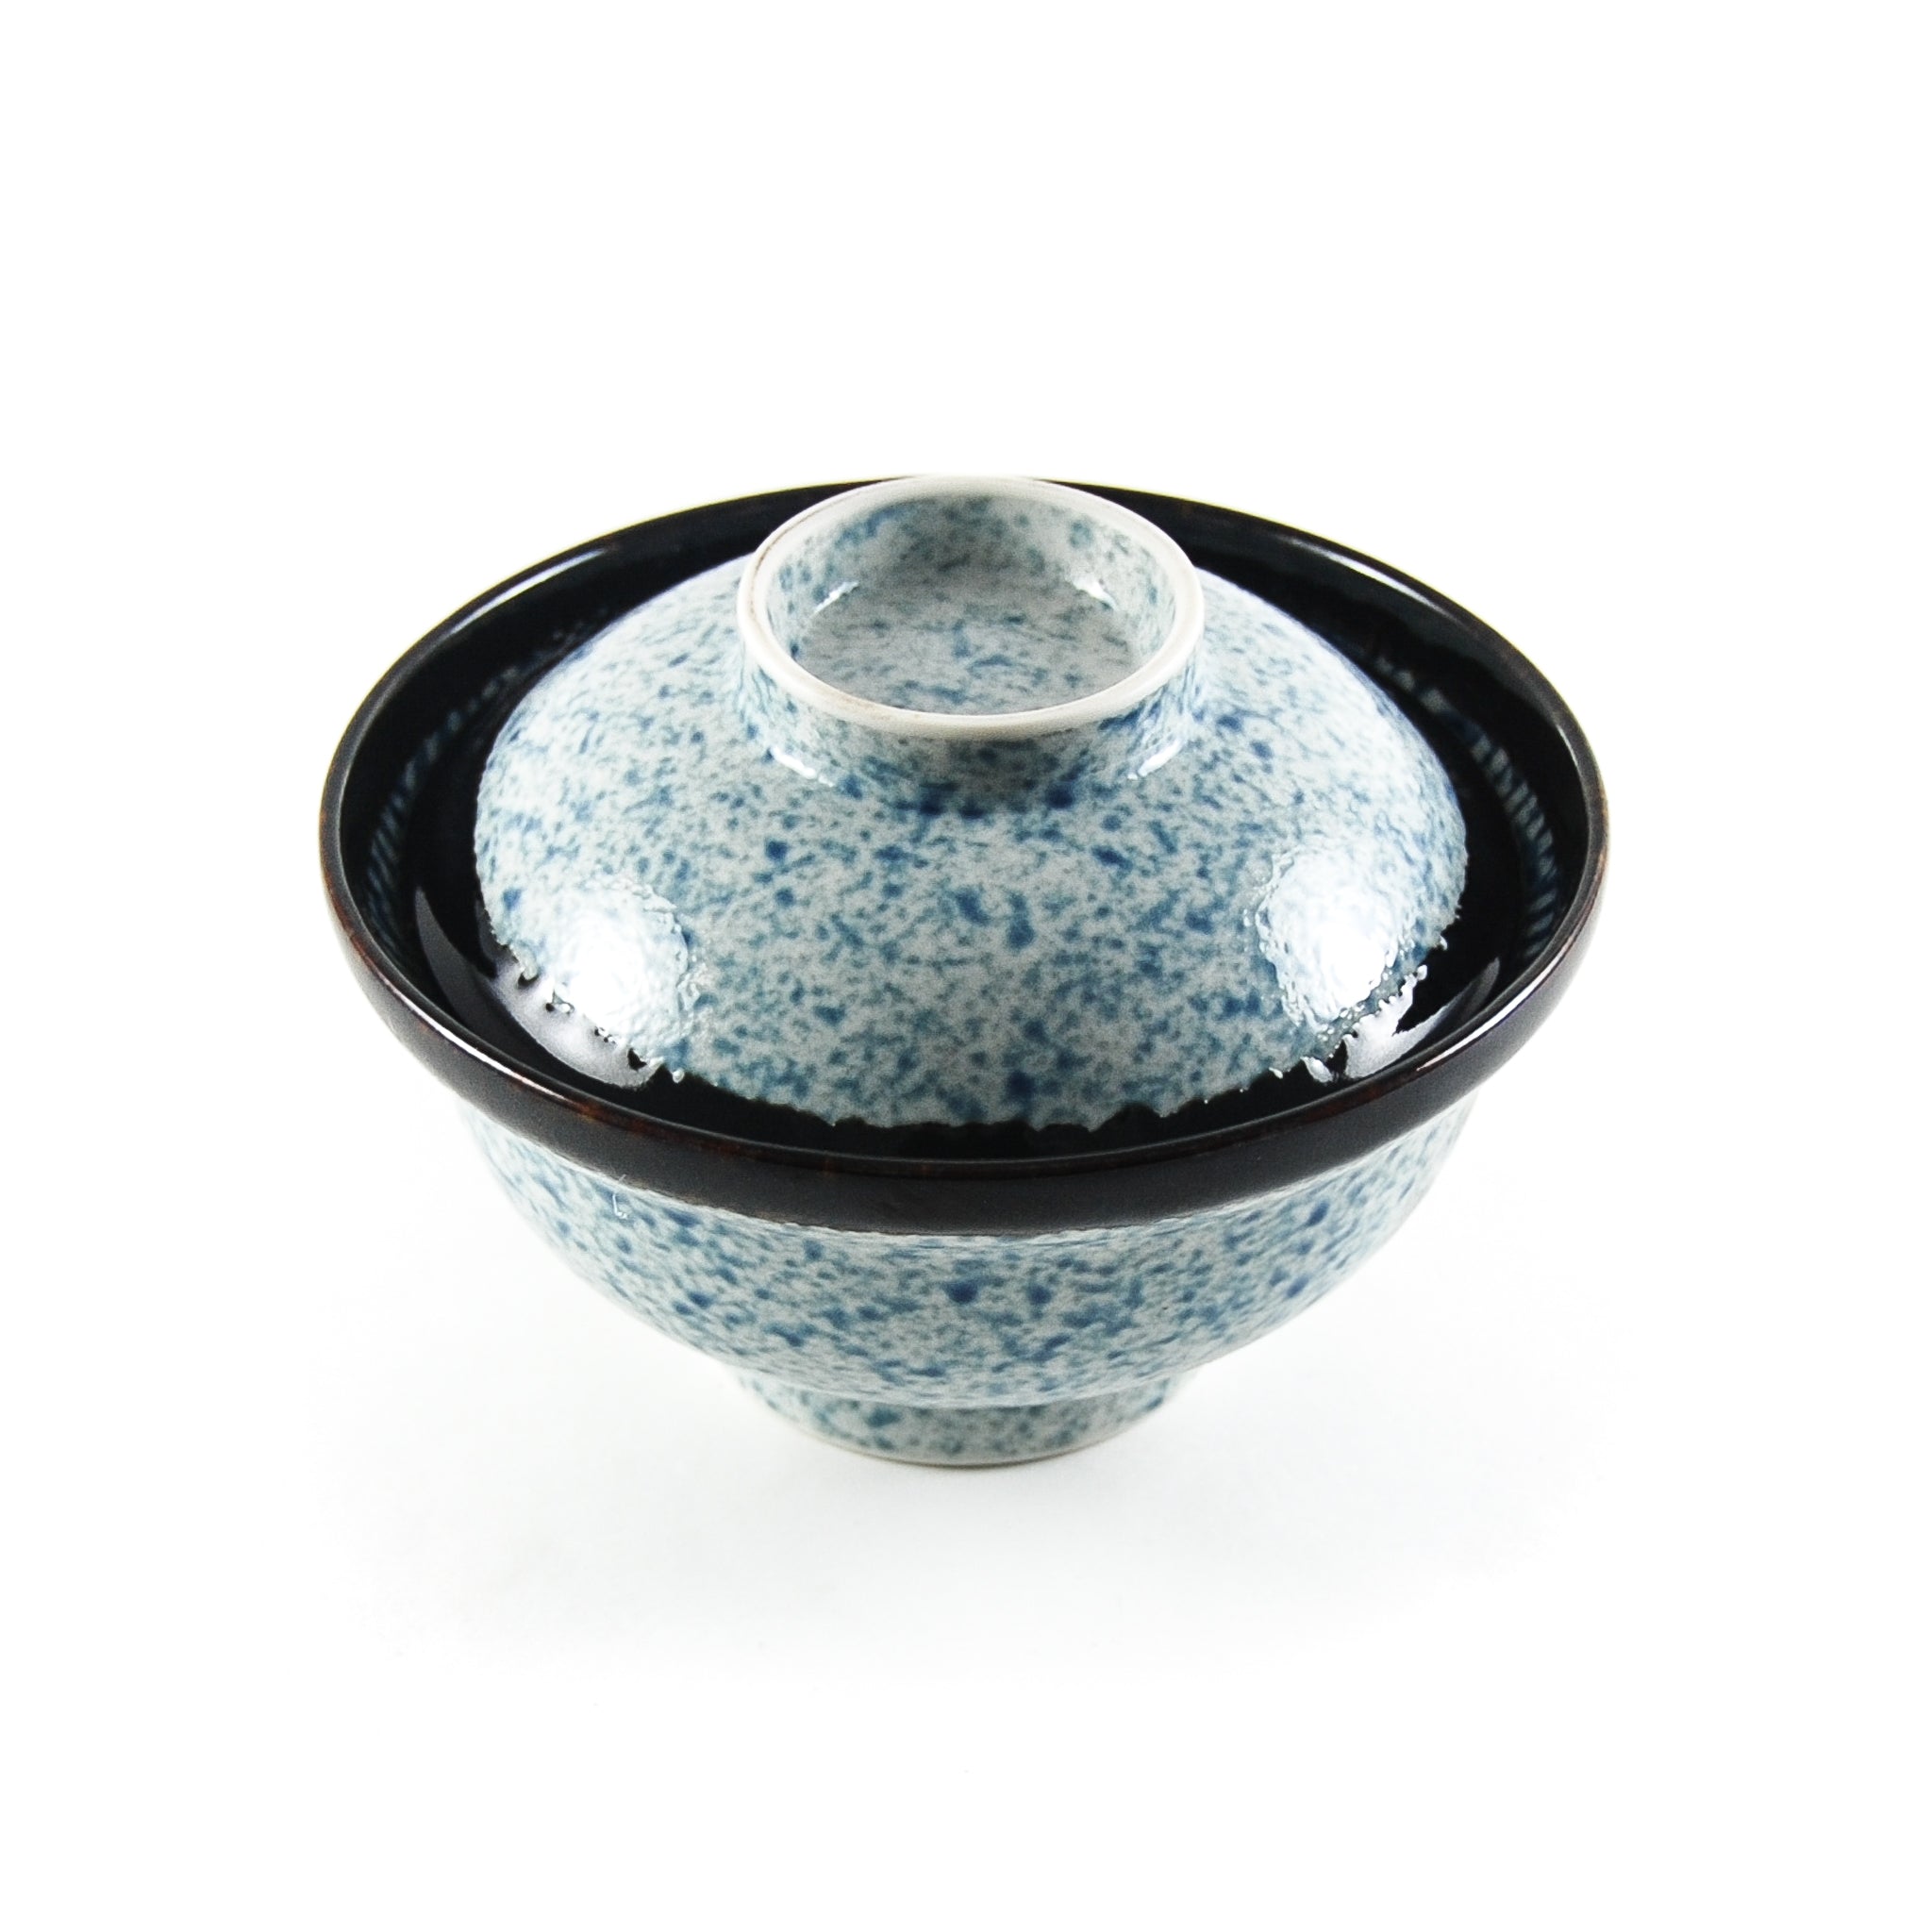 Kiji Stoneware & Ceramics Blue Wave Covered Bowl Tableware Japanese Tableware